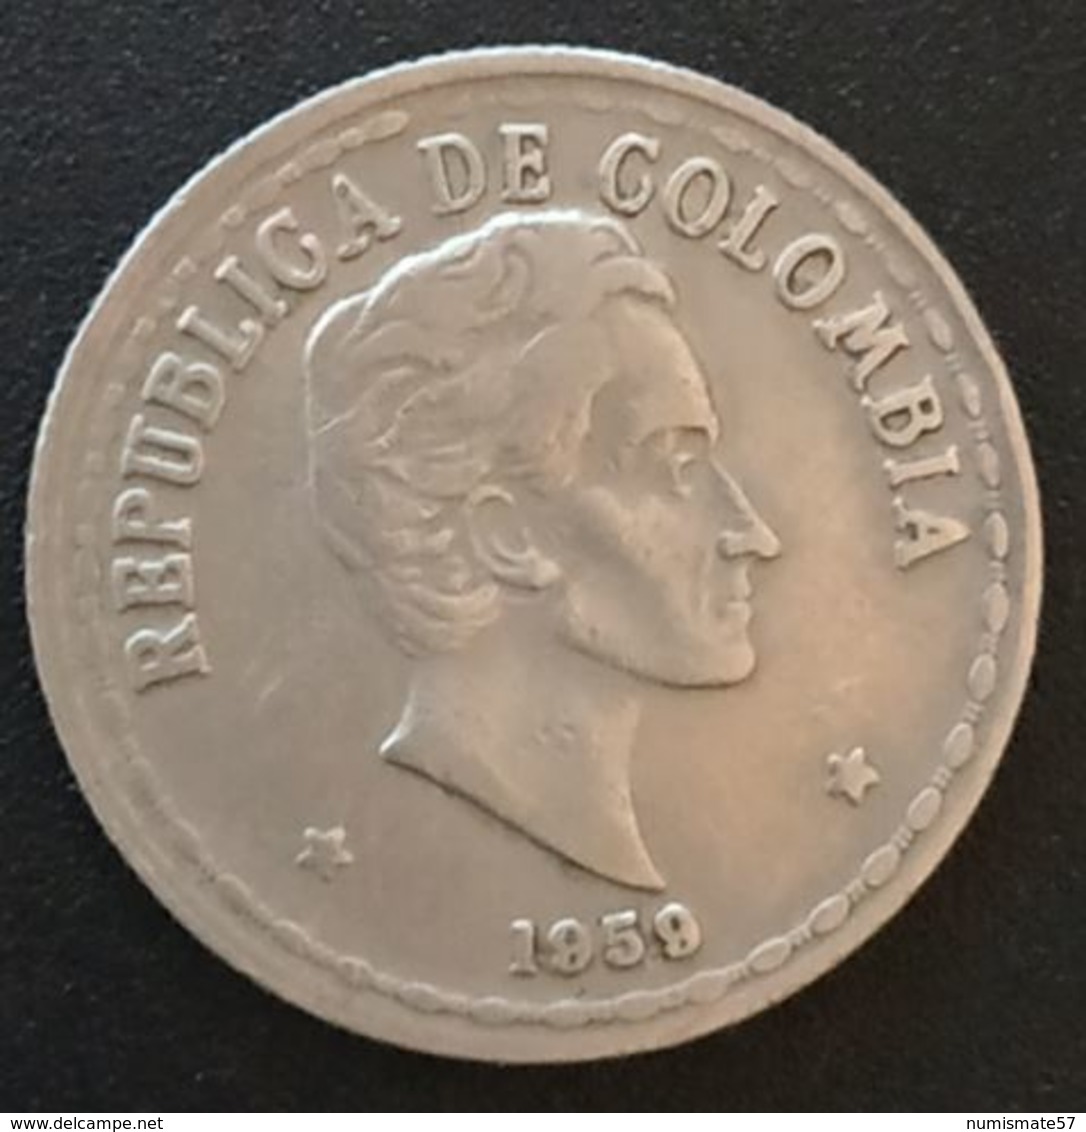 COLOMBIE - COLOMBIA - VEINTE - 20 CENTAVOS 1959 - KM 215 - Colombie